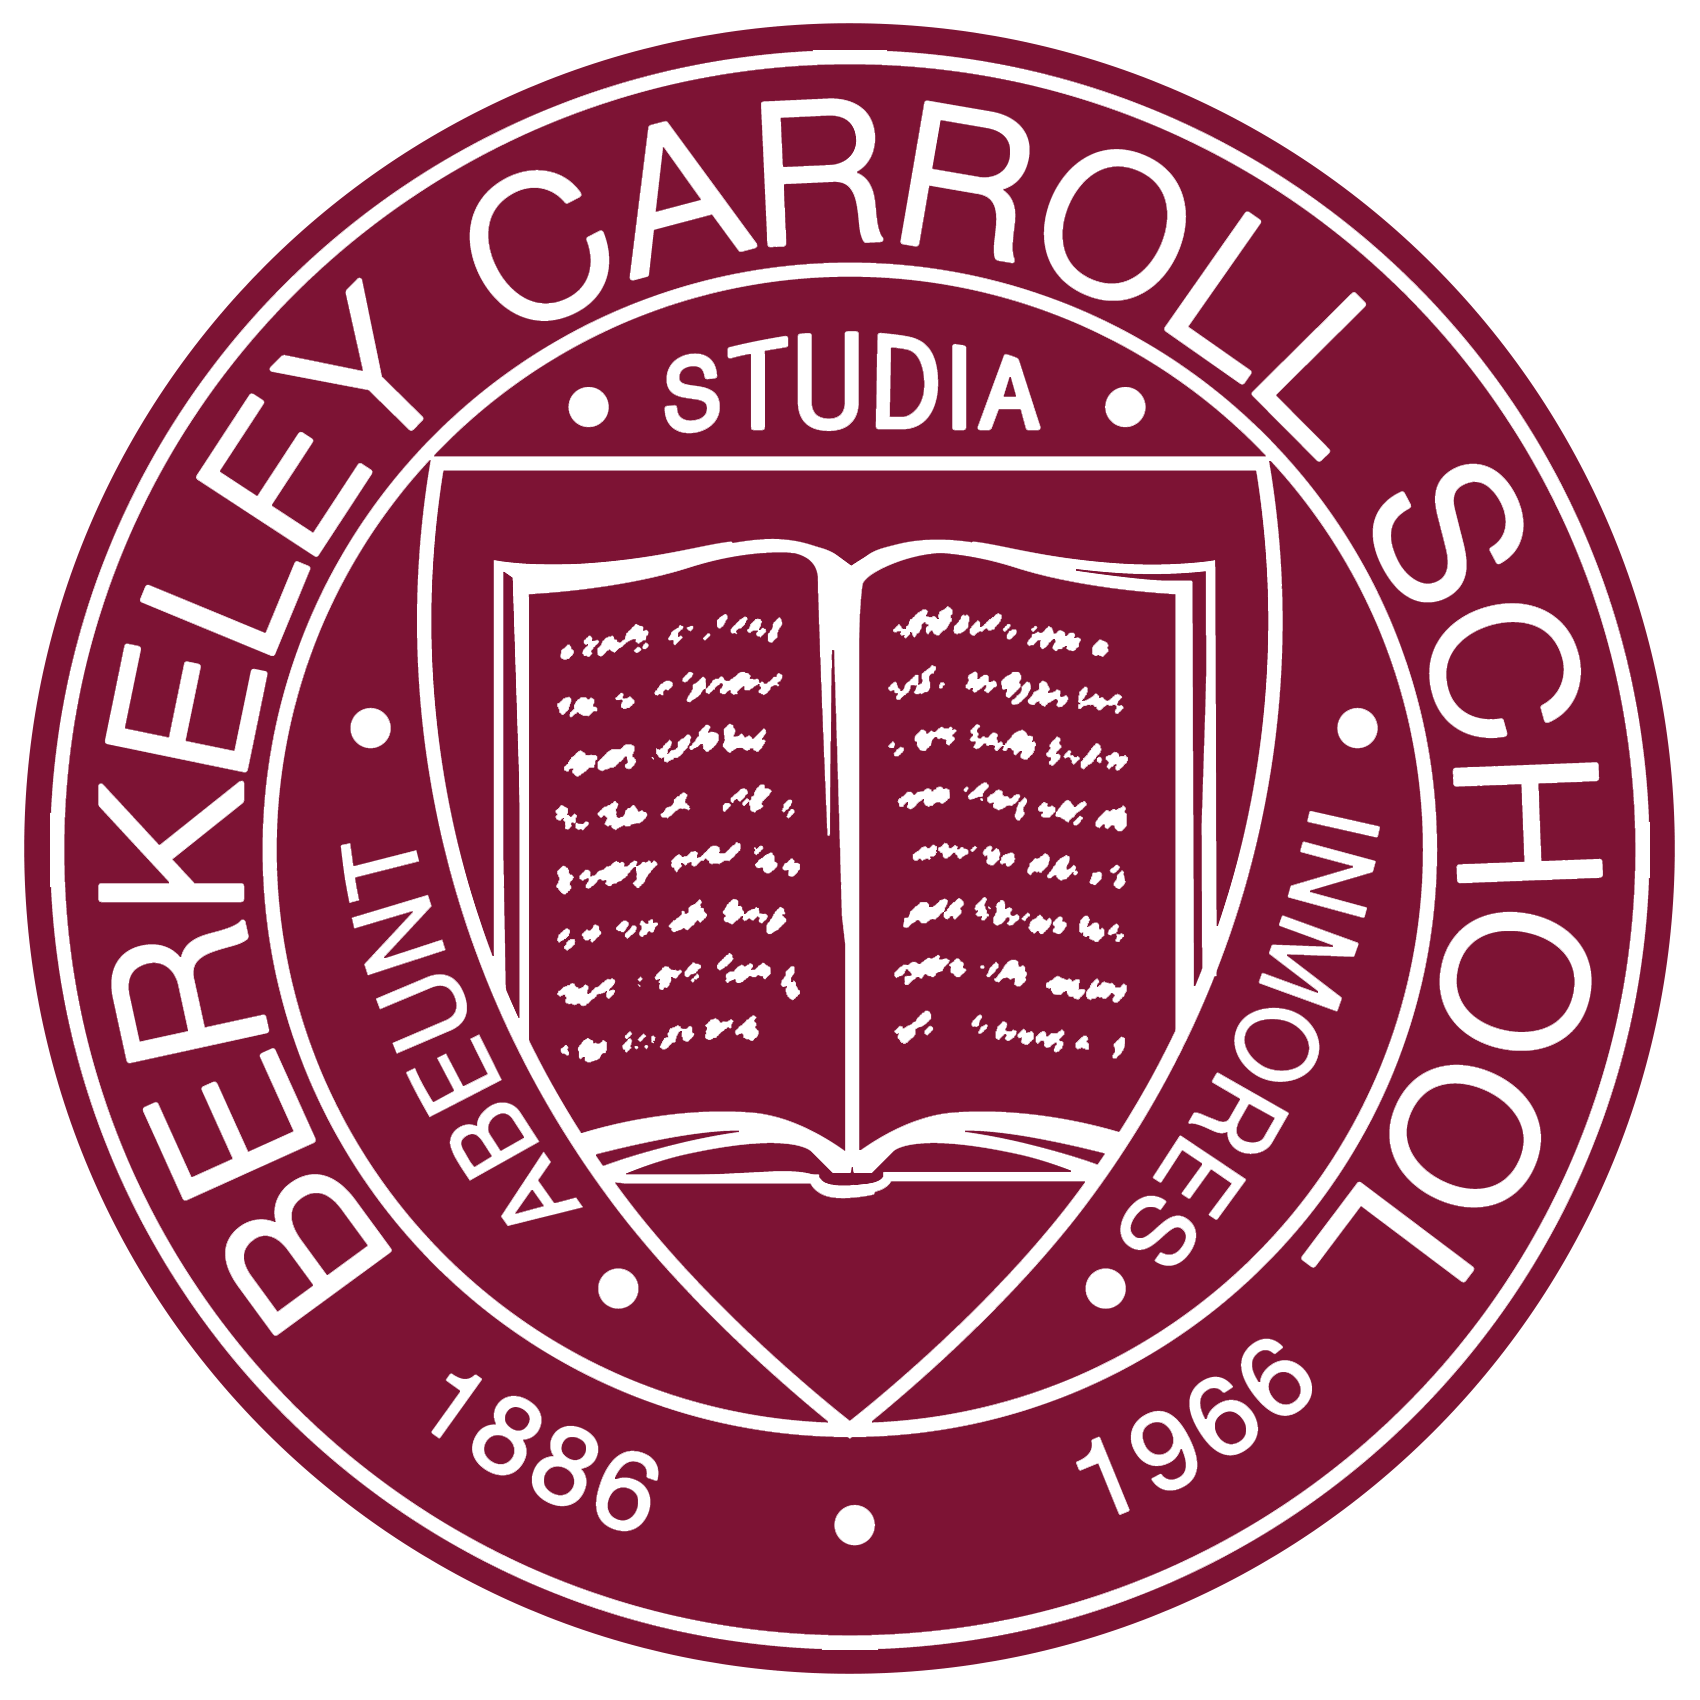 Berkeley Carroll